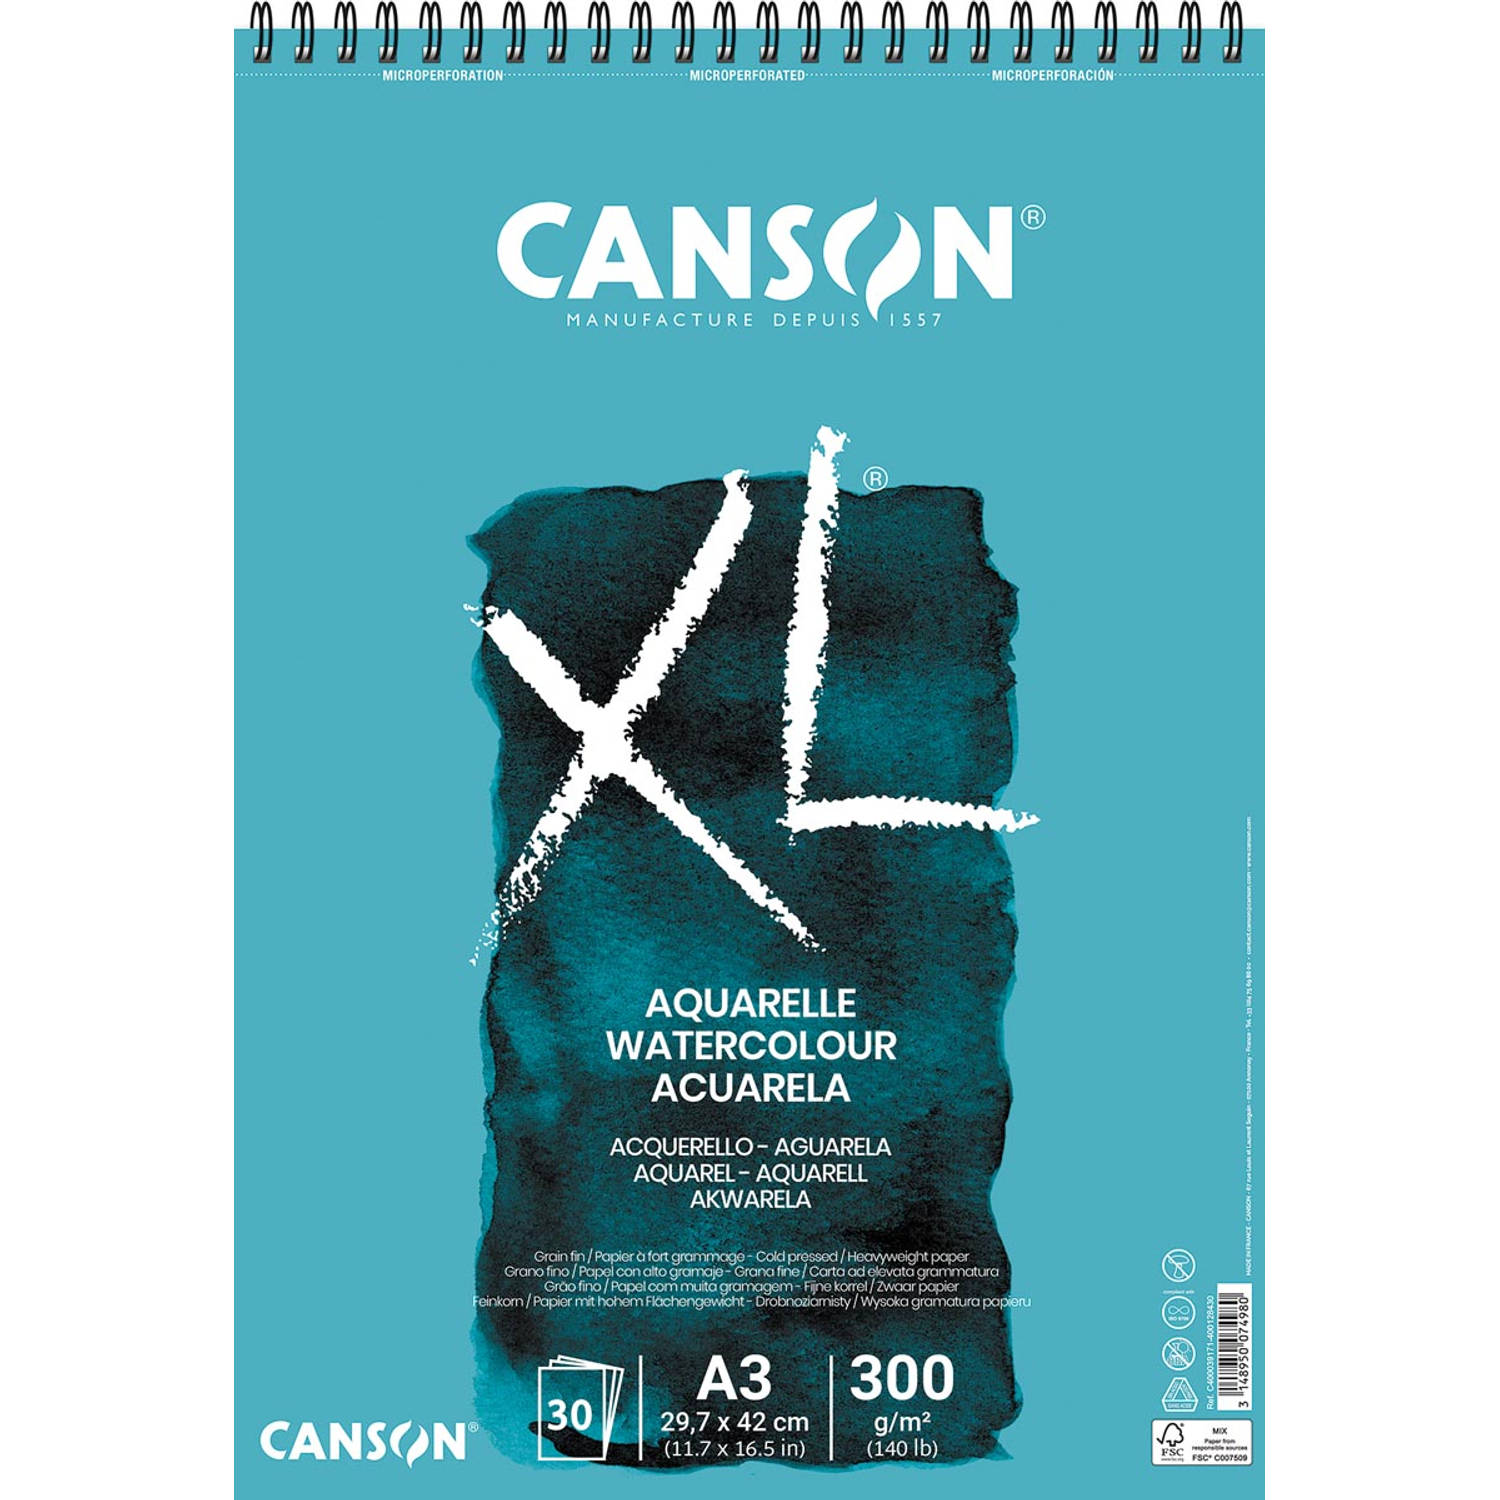 Canson schetsblok xl aquarelle 300g-m² ft a3, 30 vel